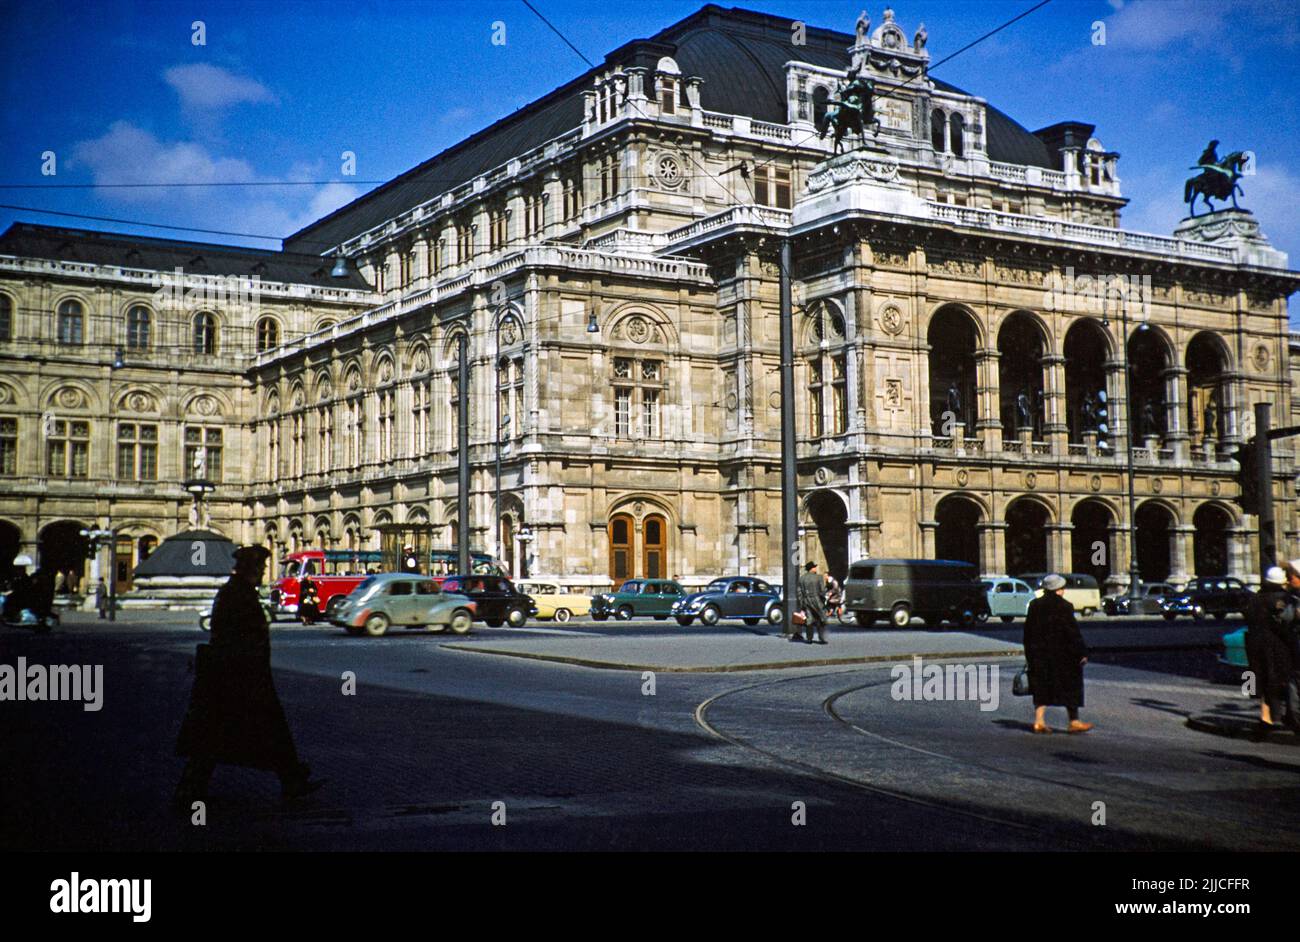 Operahouse Building, Wien, Österreich 1958 Renaissance Revival architecture fertiggestellt 1869 Stockfoto